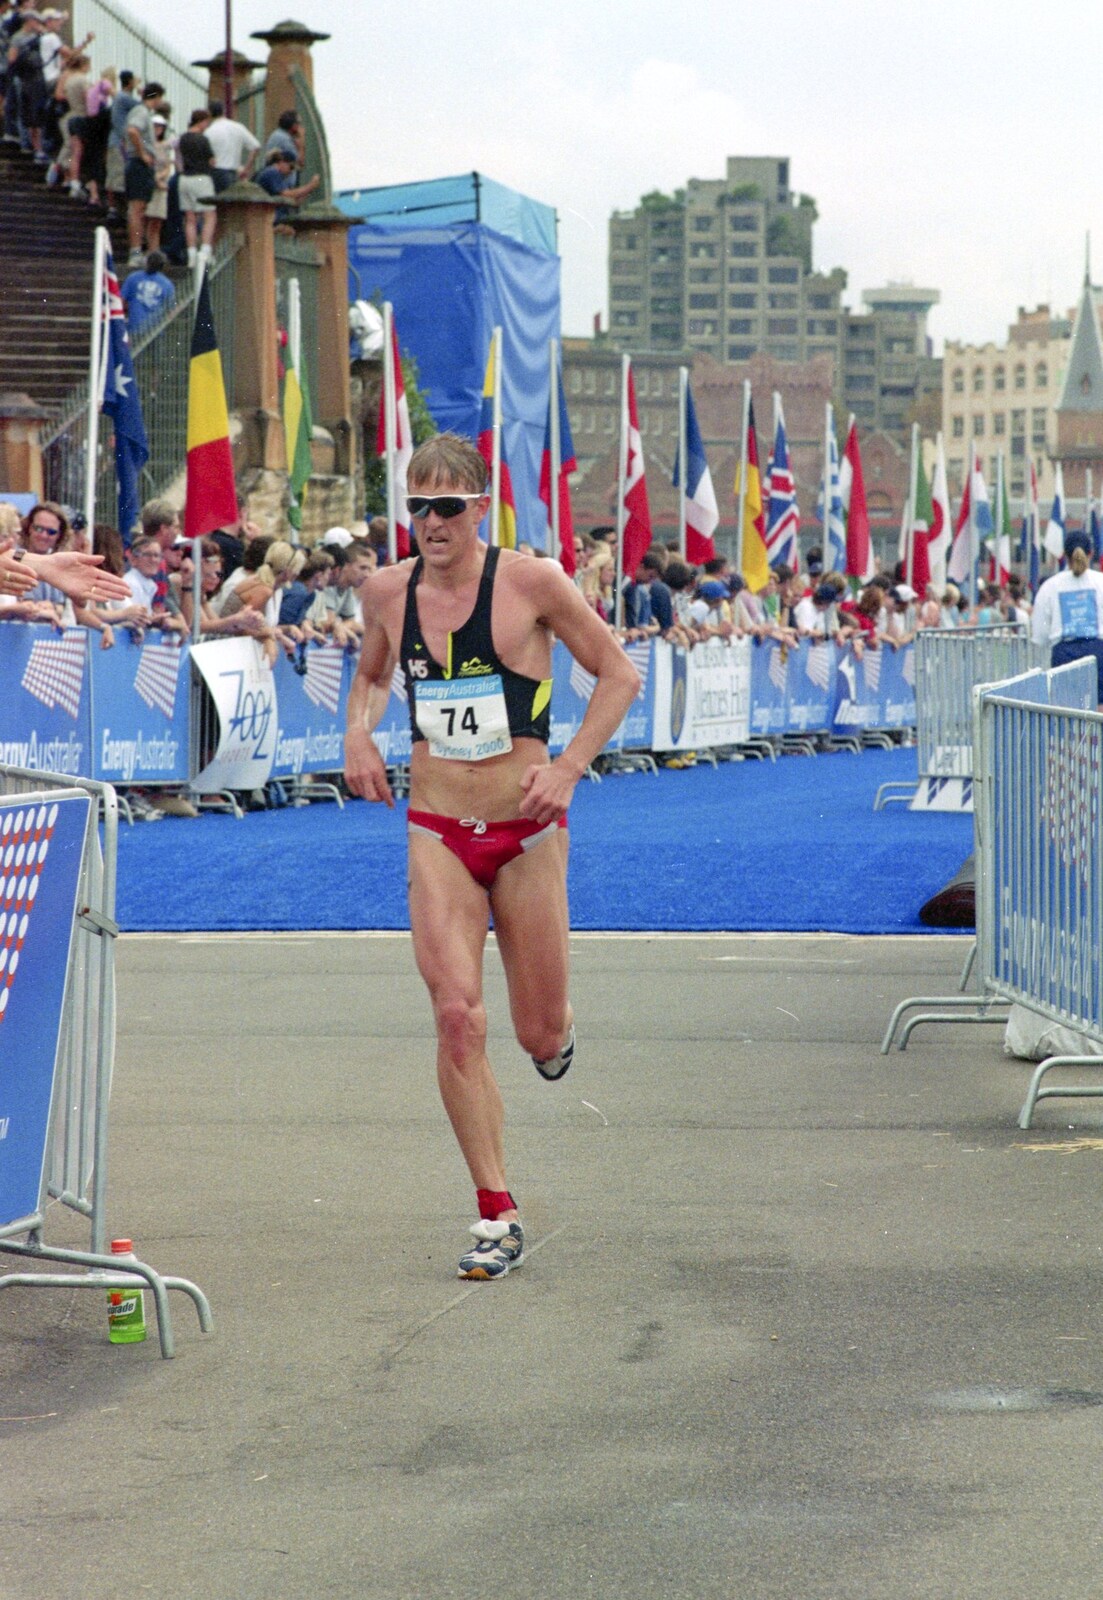 A runner comes in from Sydney Triathlon, Sydney, Australia - 16th April 2000